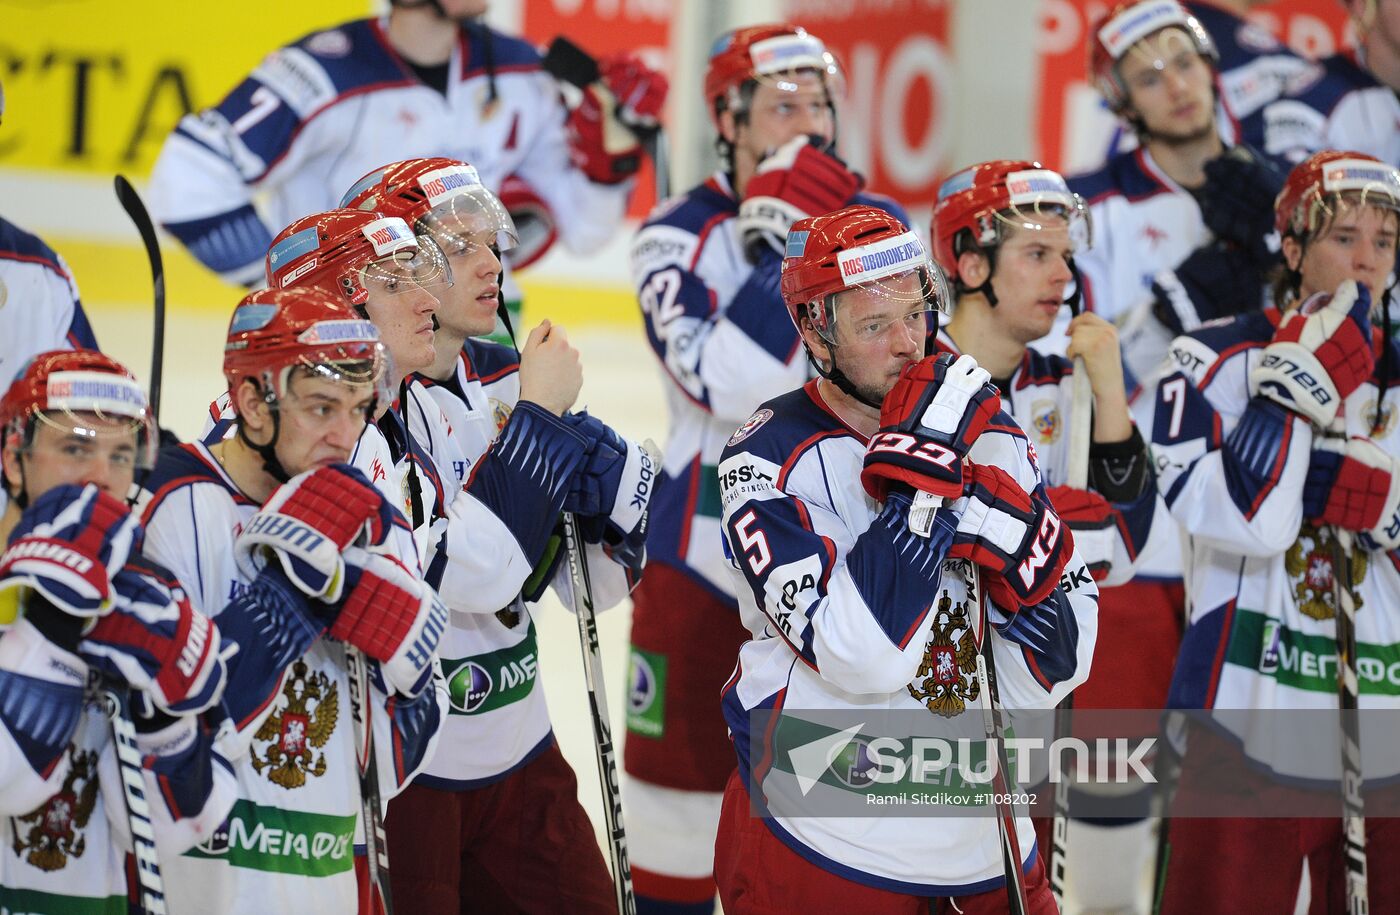 2012 Kajotbet Hockey Games. Czech Republic vs. Russia